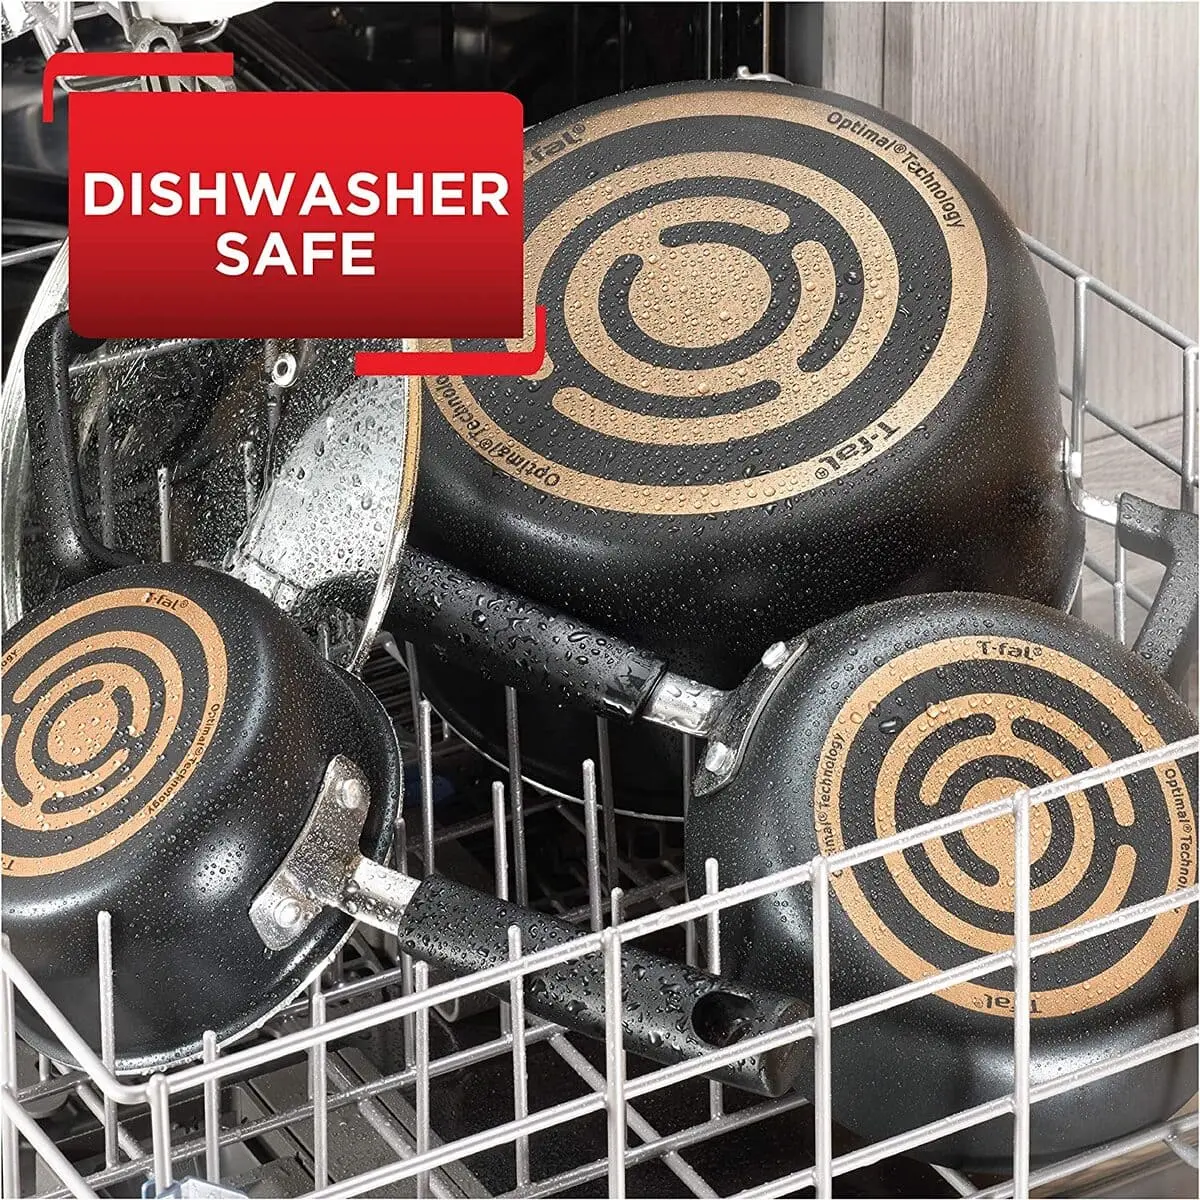 are t fal pans dishwasher safe